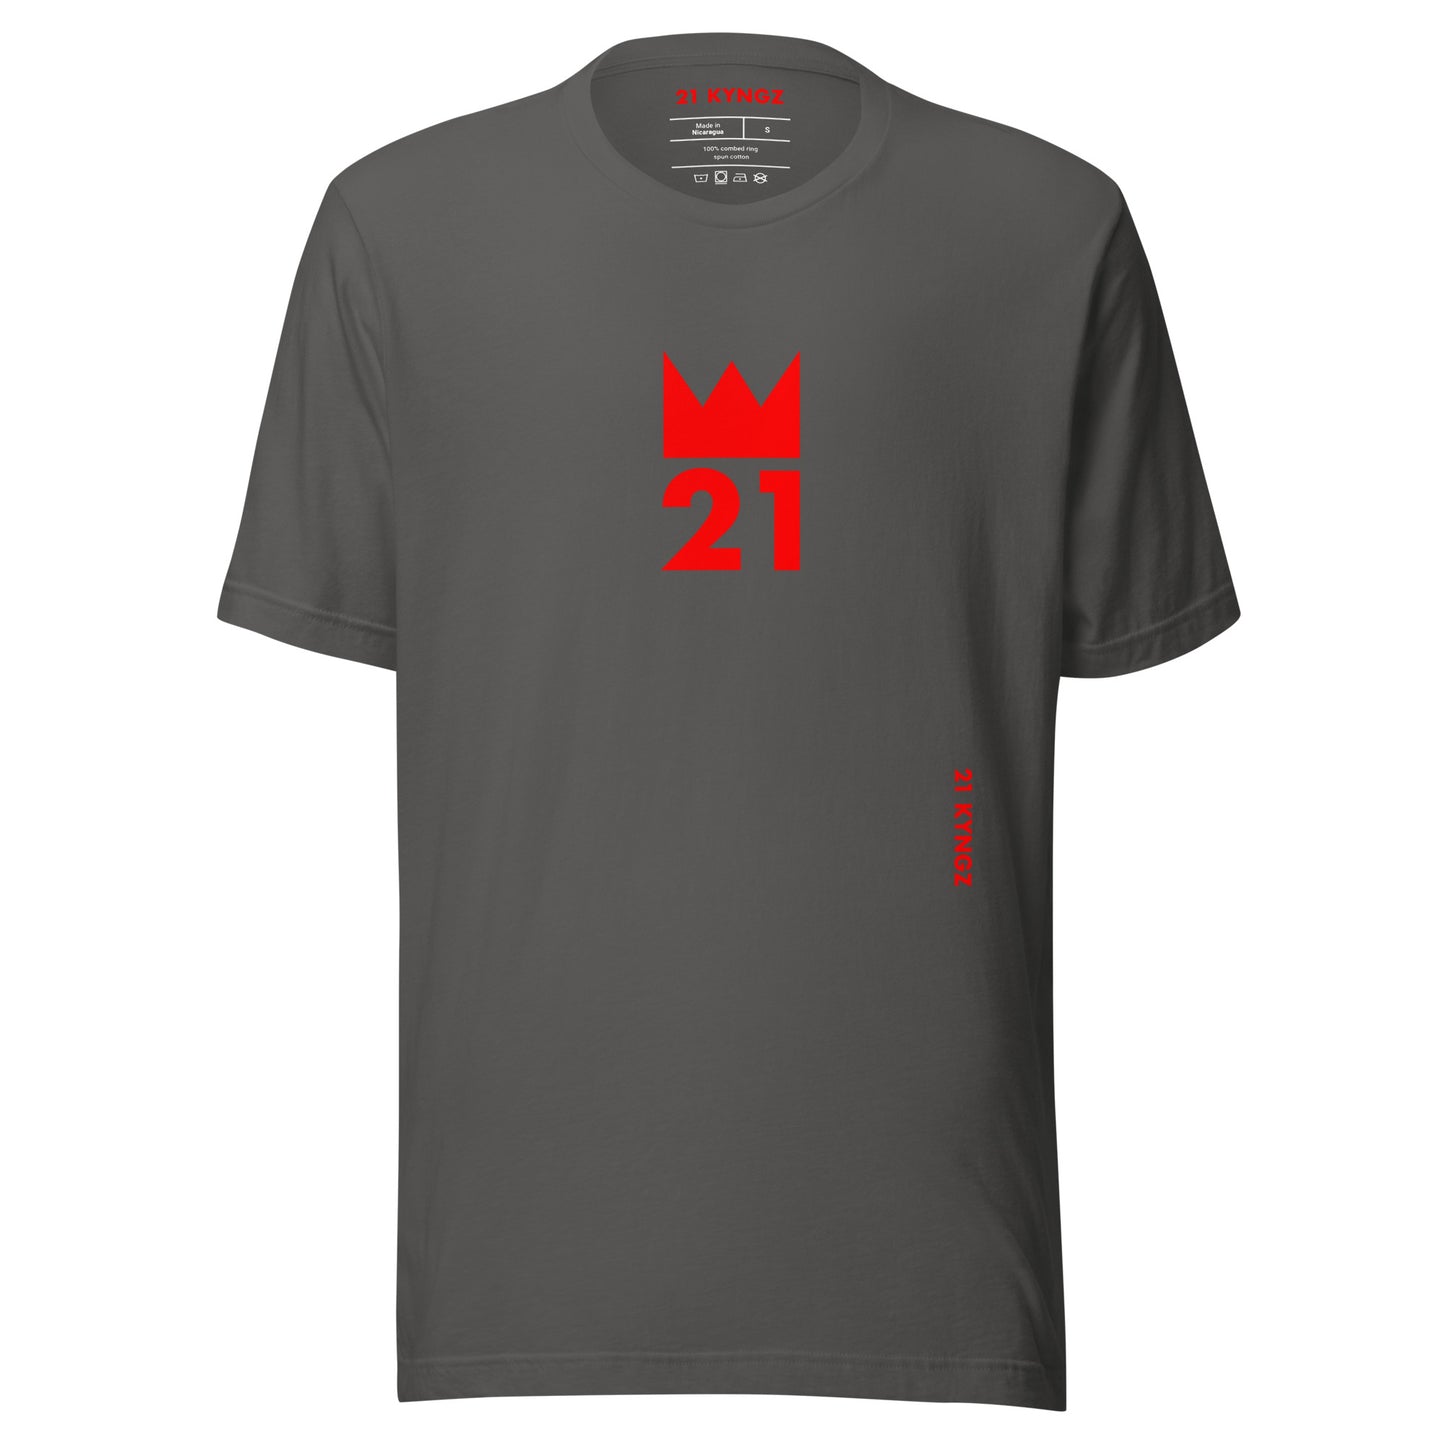 21 KYNGZ (R)2 t-shirt